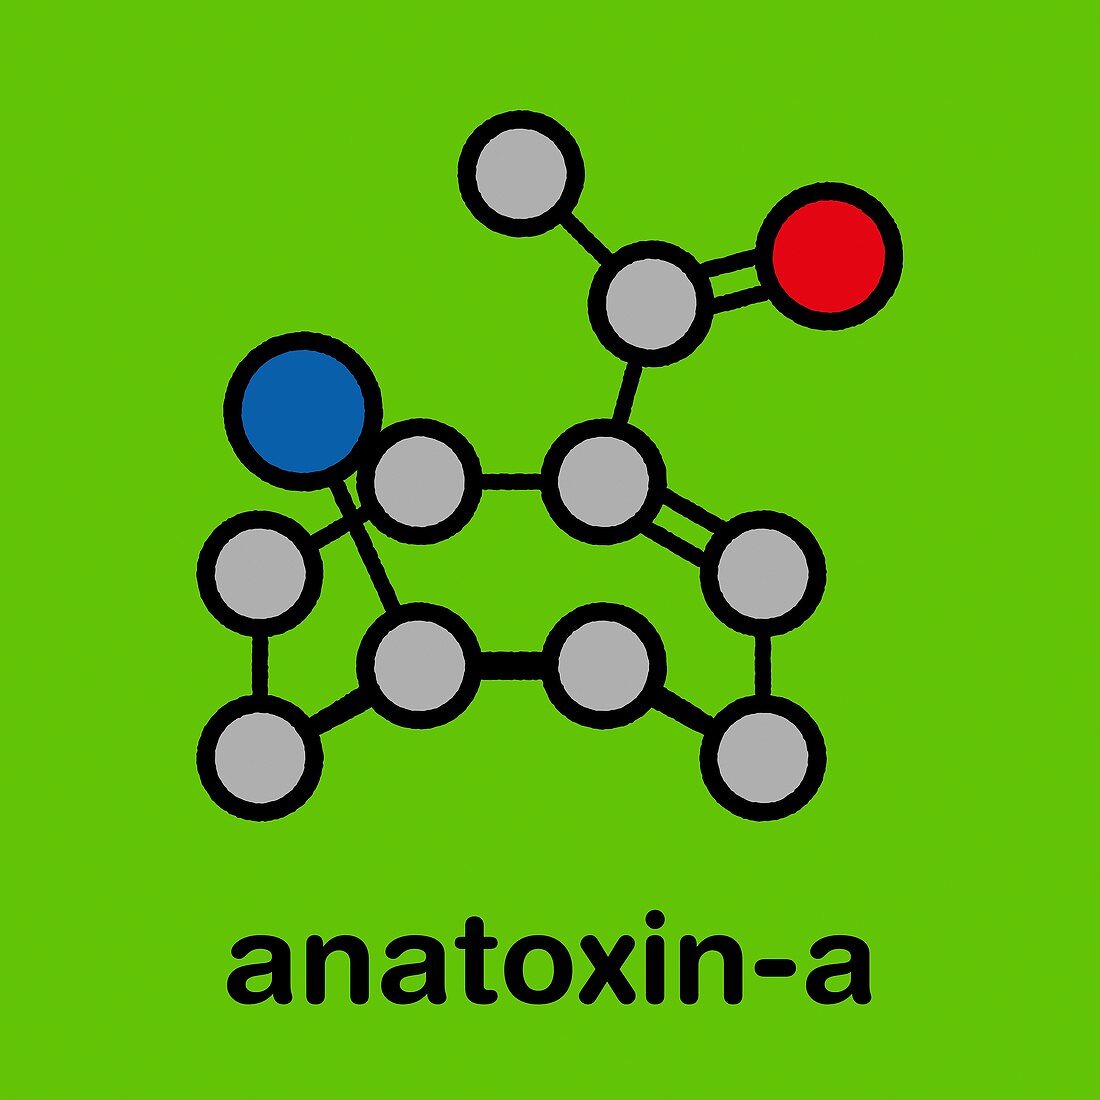 Anatoxin-a molecule, illustration